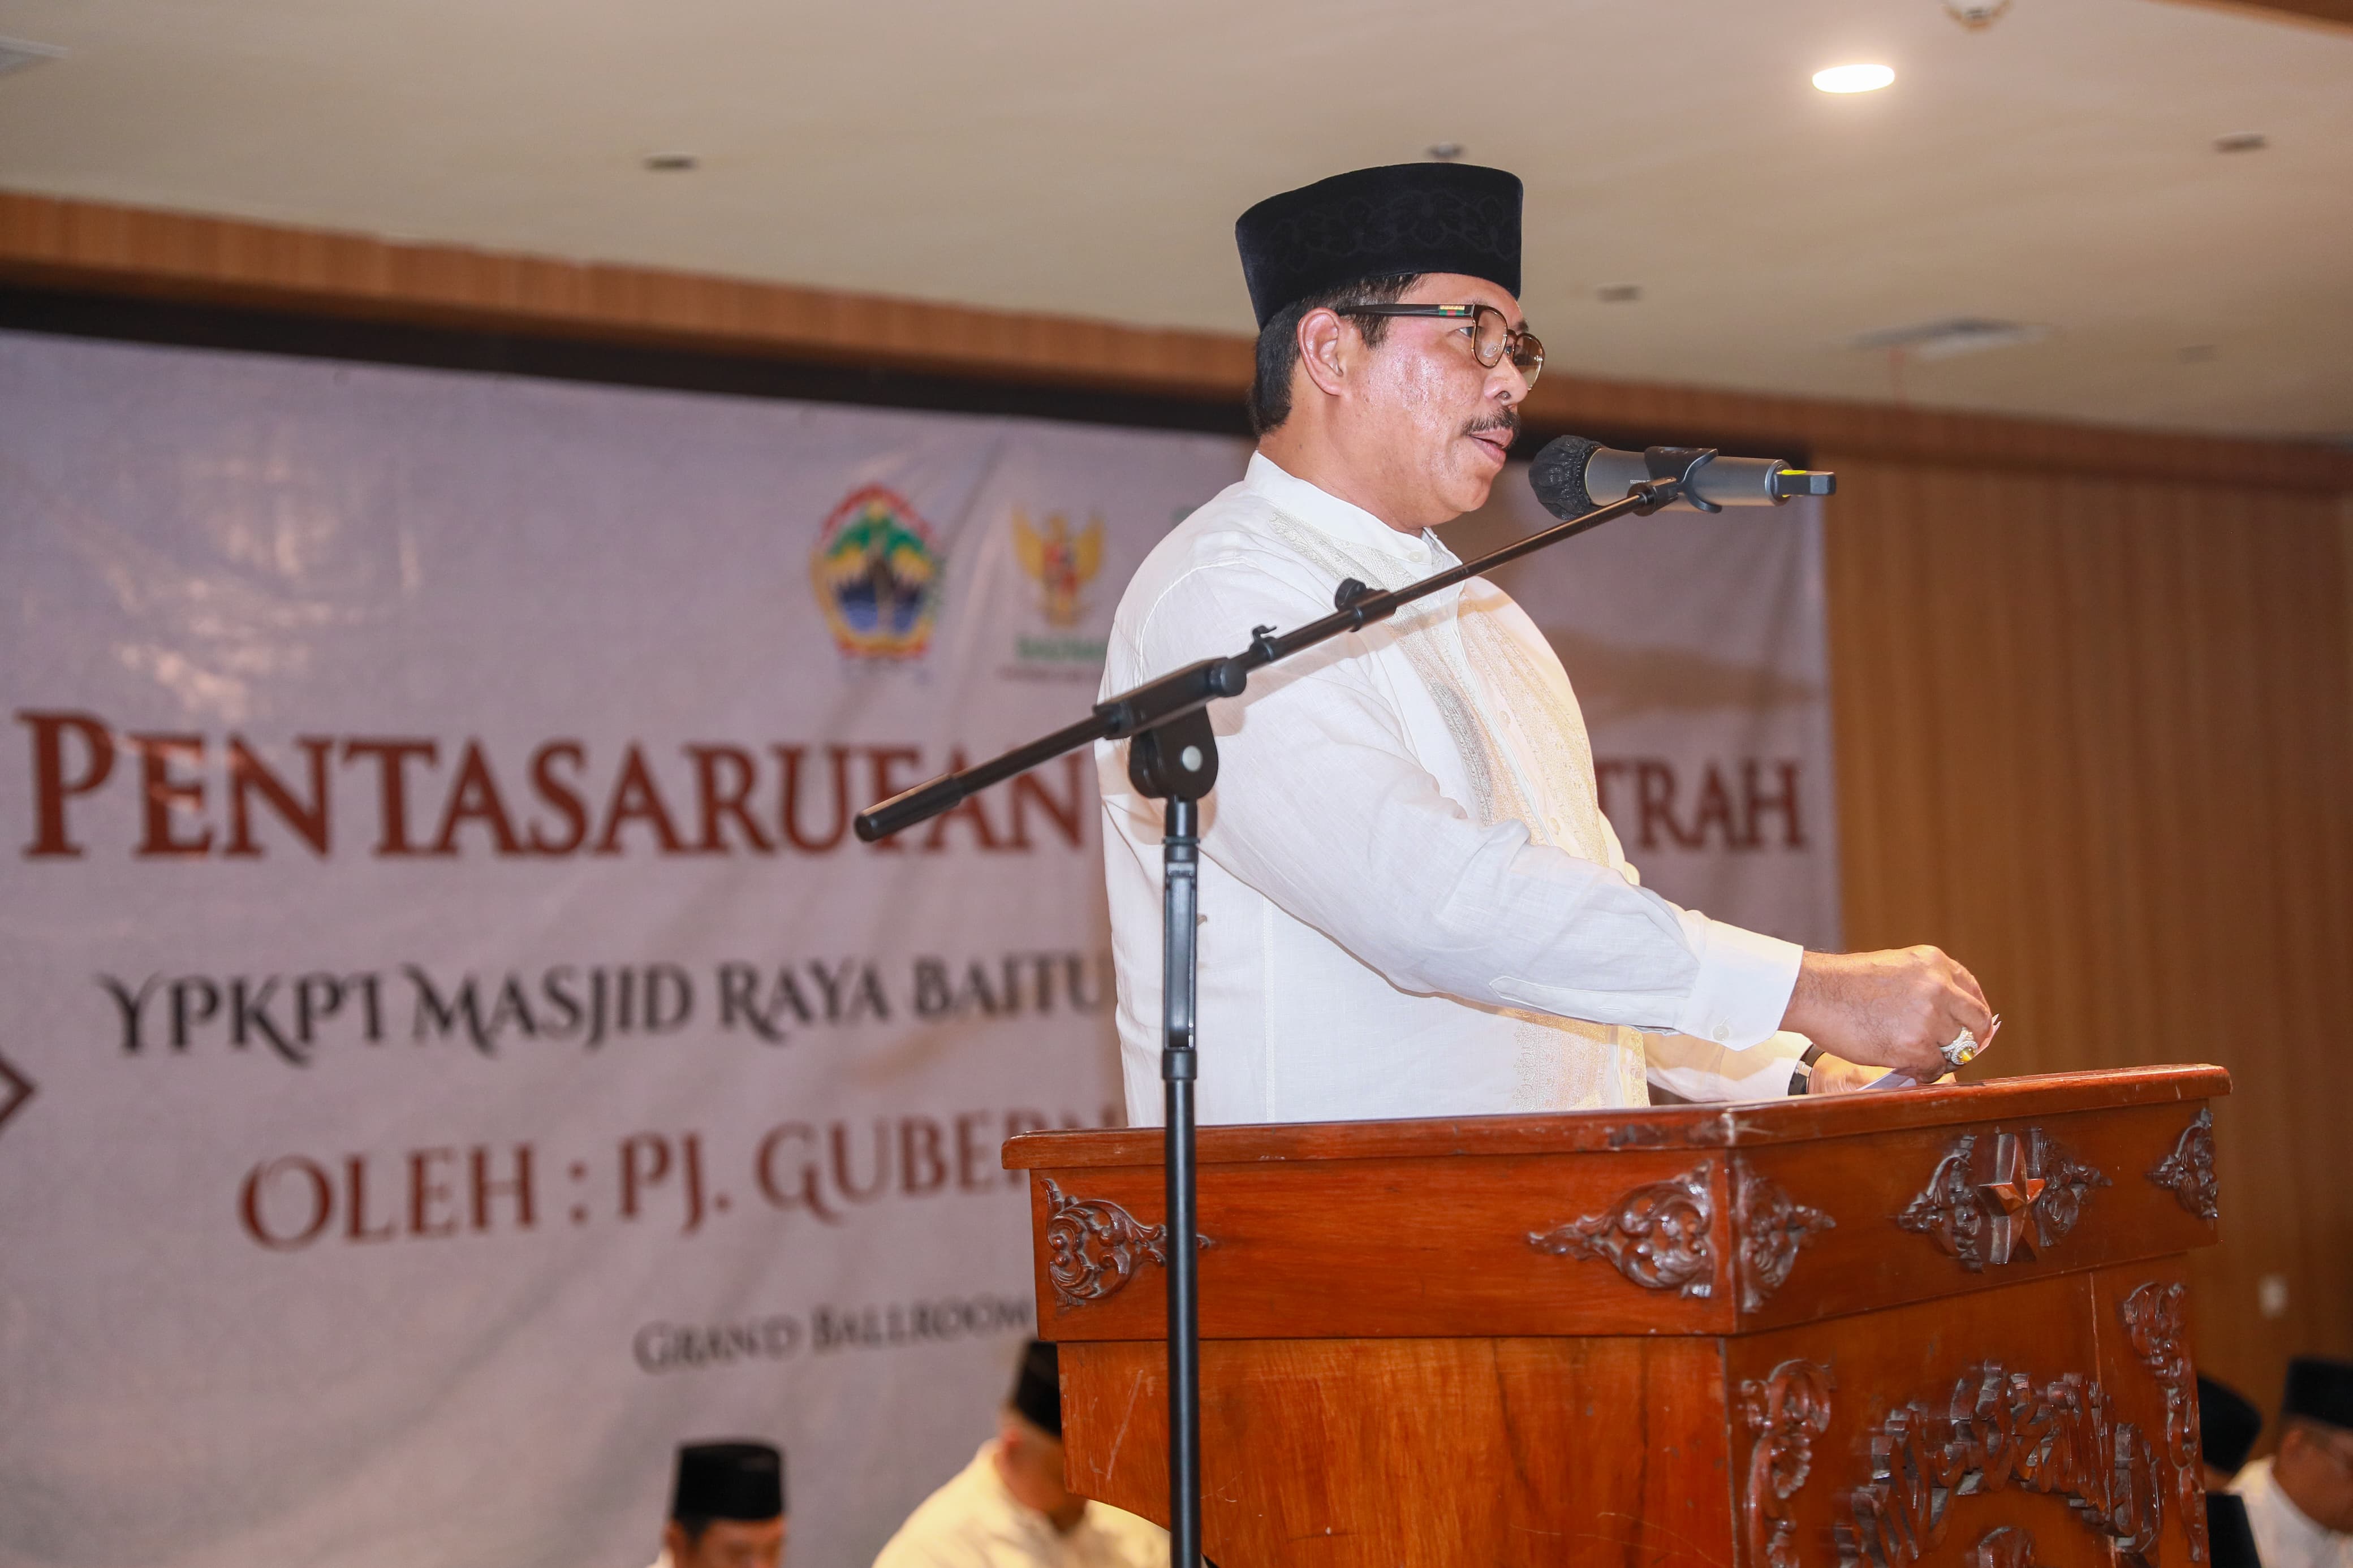 Sambut Lebaran, Pj Gubernur Jateng Nana Sudjana Ucapkan Selamat Idul Fitri 1445 H